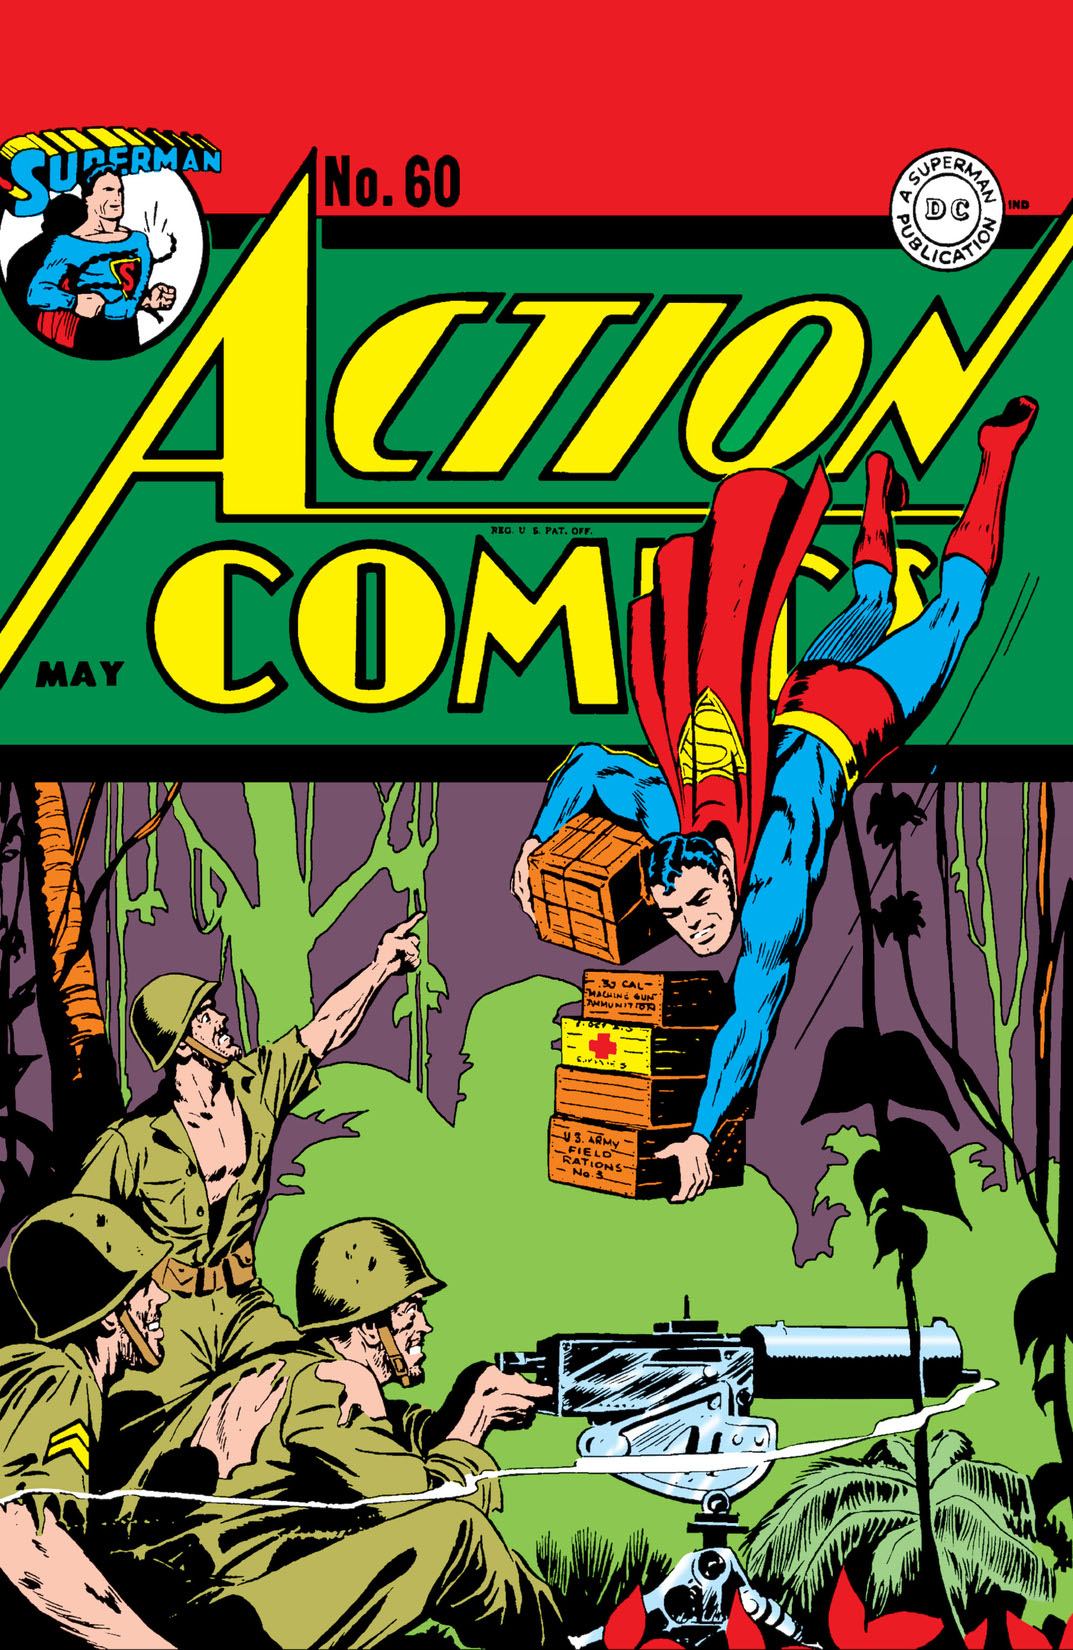 Action Comics (1938-) #60 preview images